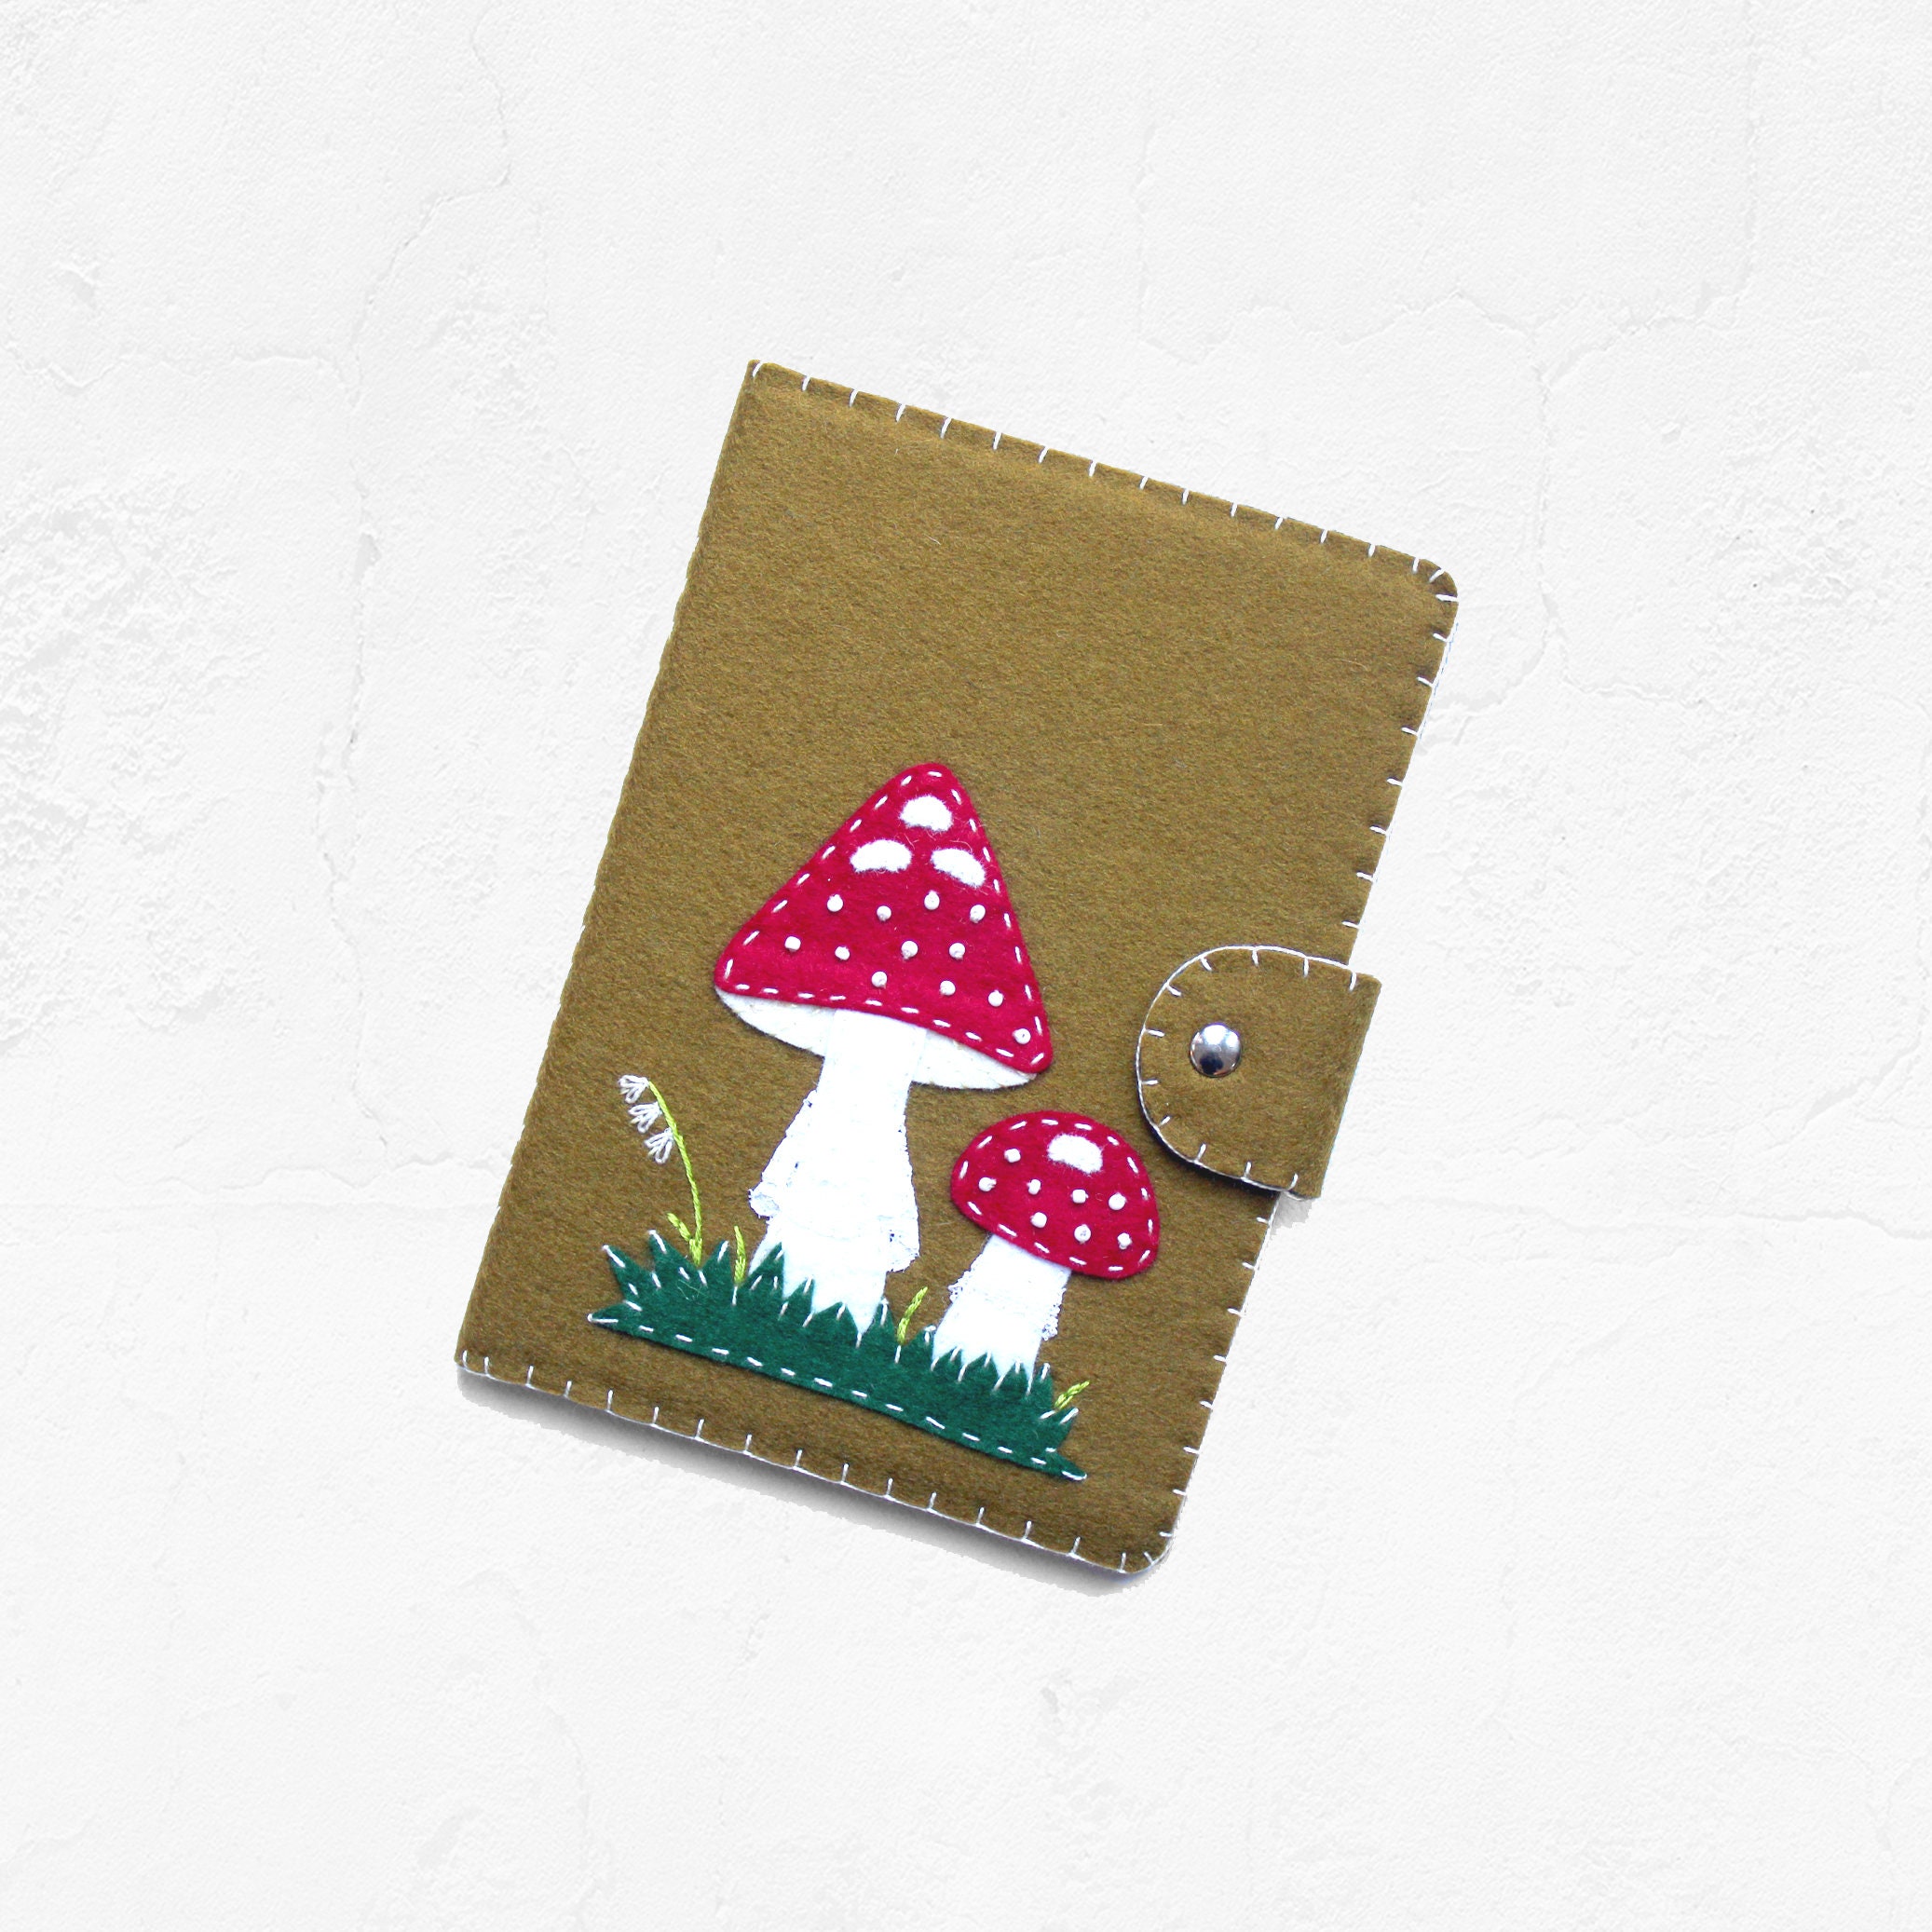 Cute Mushrooms Kindle Case Kindle Paperwhite Case